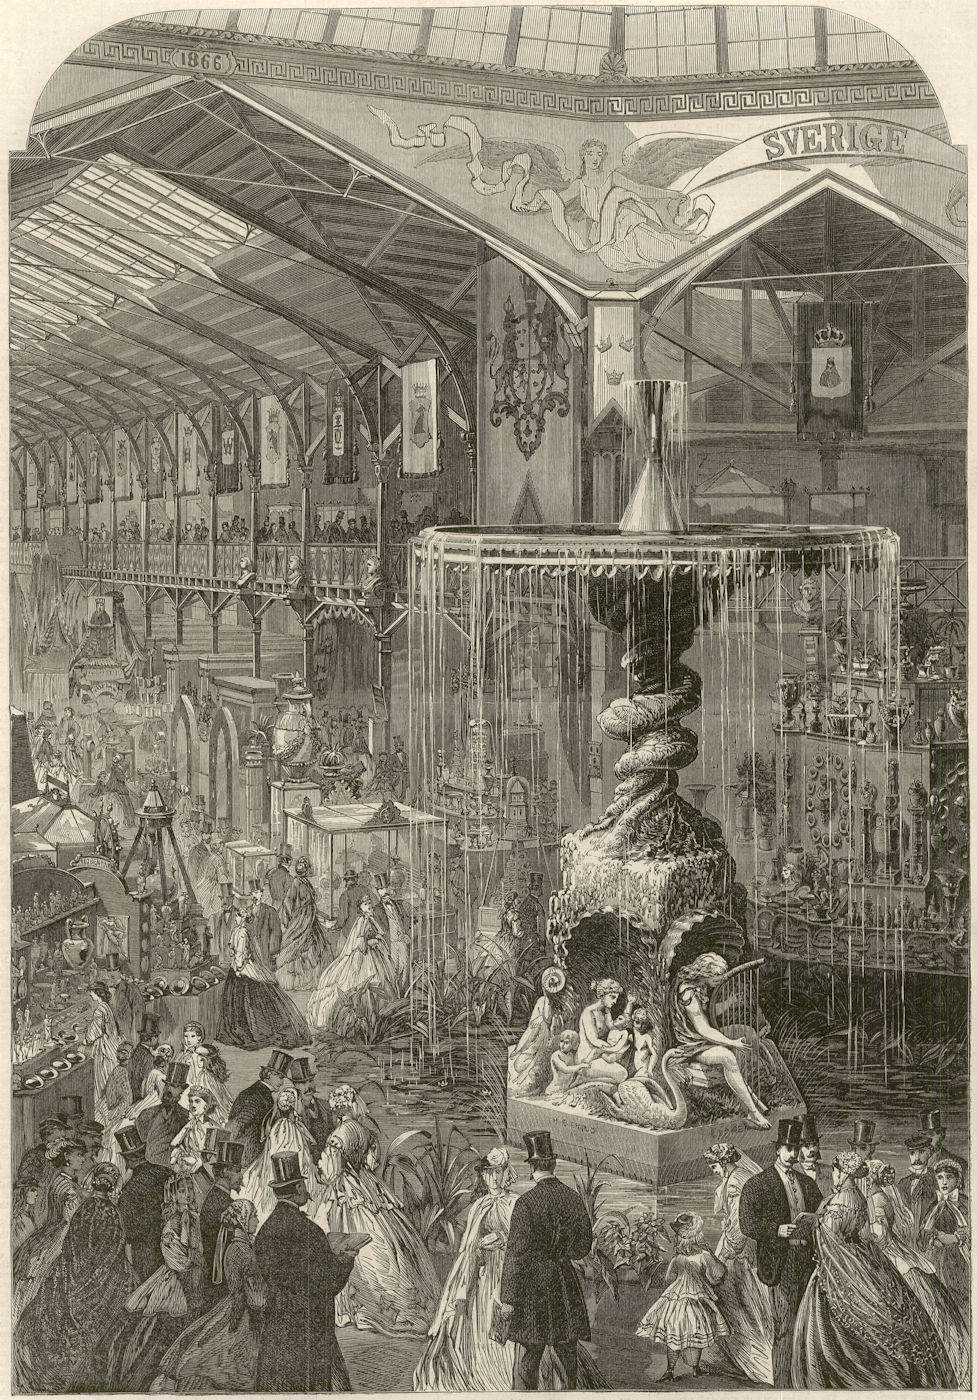 General Industrial Exhibition. Expo of Arts & Industry. Stockholm. Sweden 1866